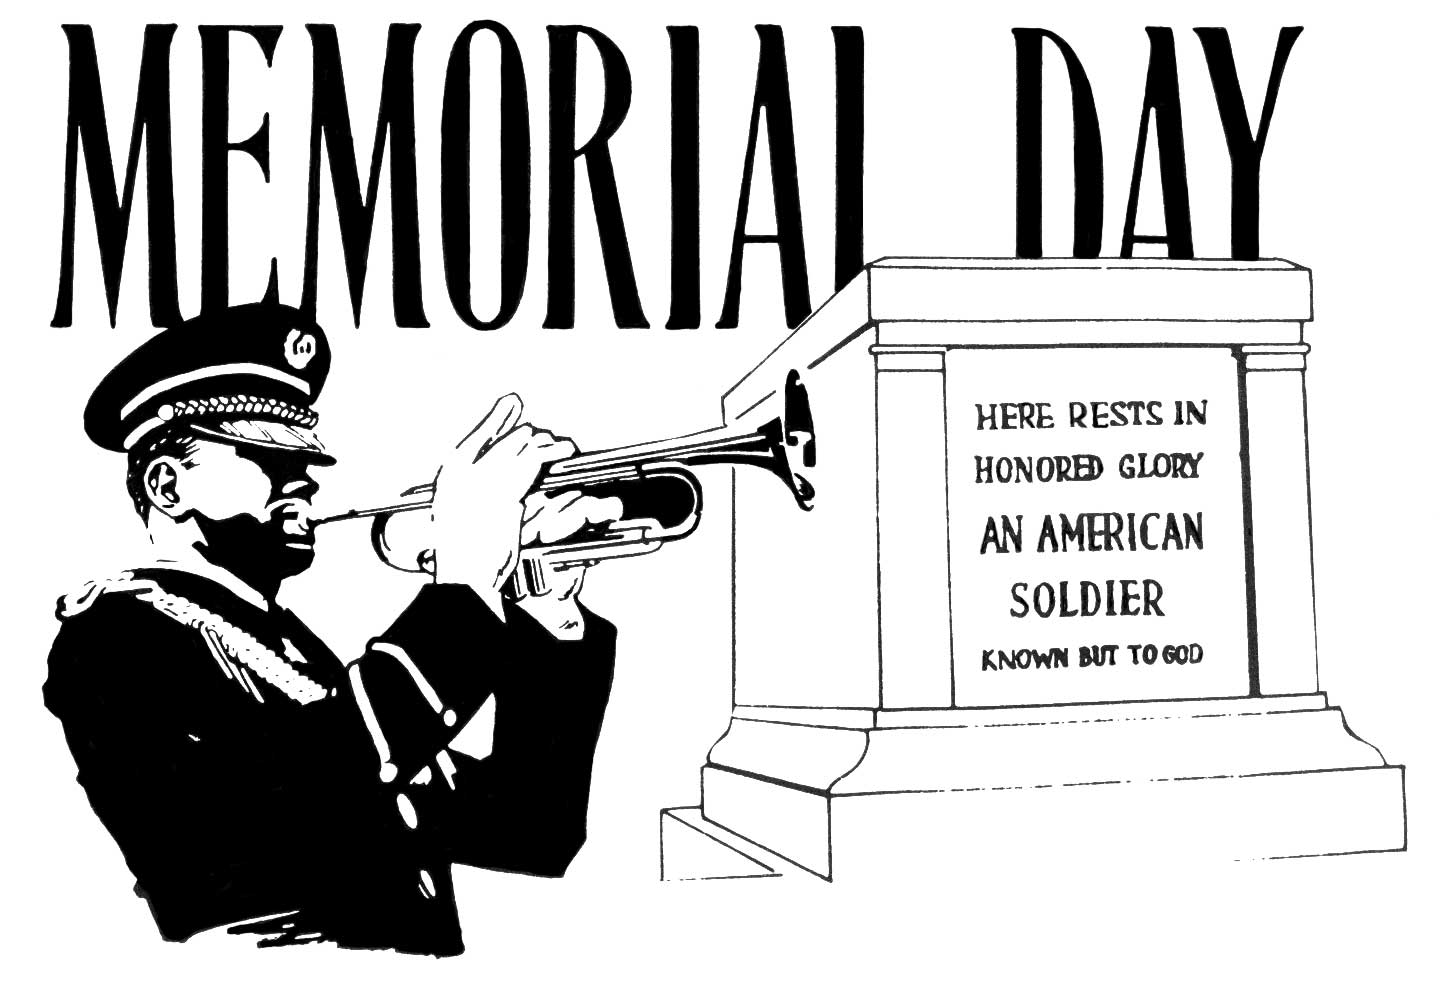 Free Memorial Day Art, Download Free Memorial Day Art png images, Free